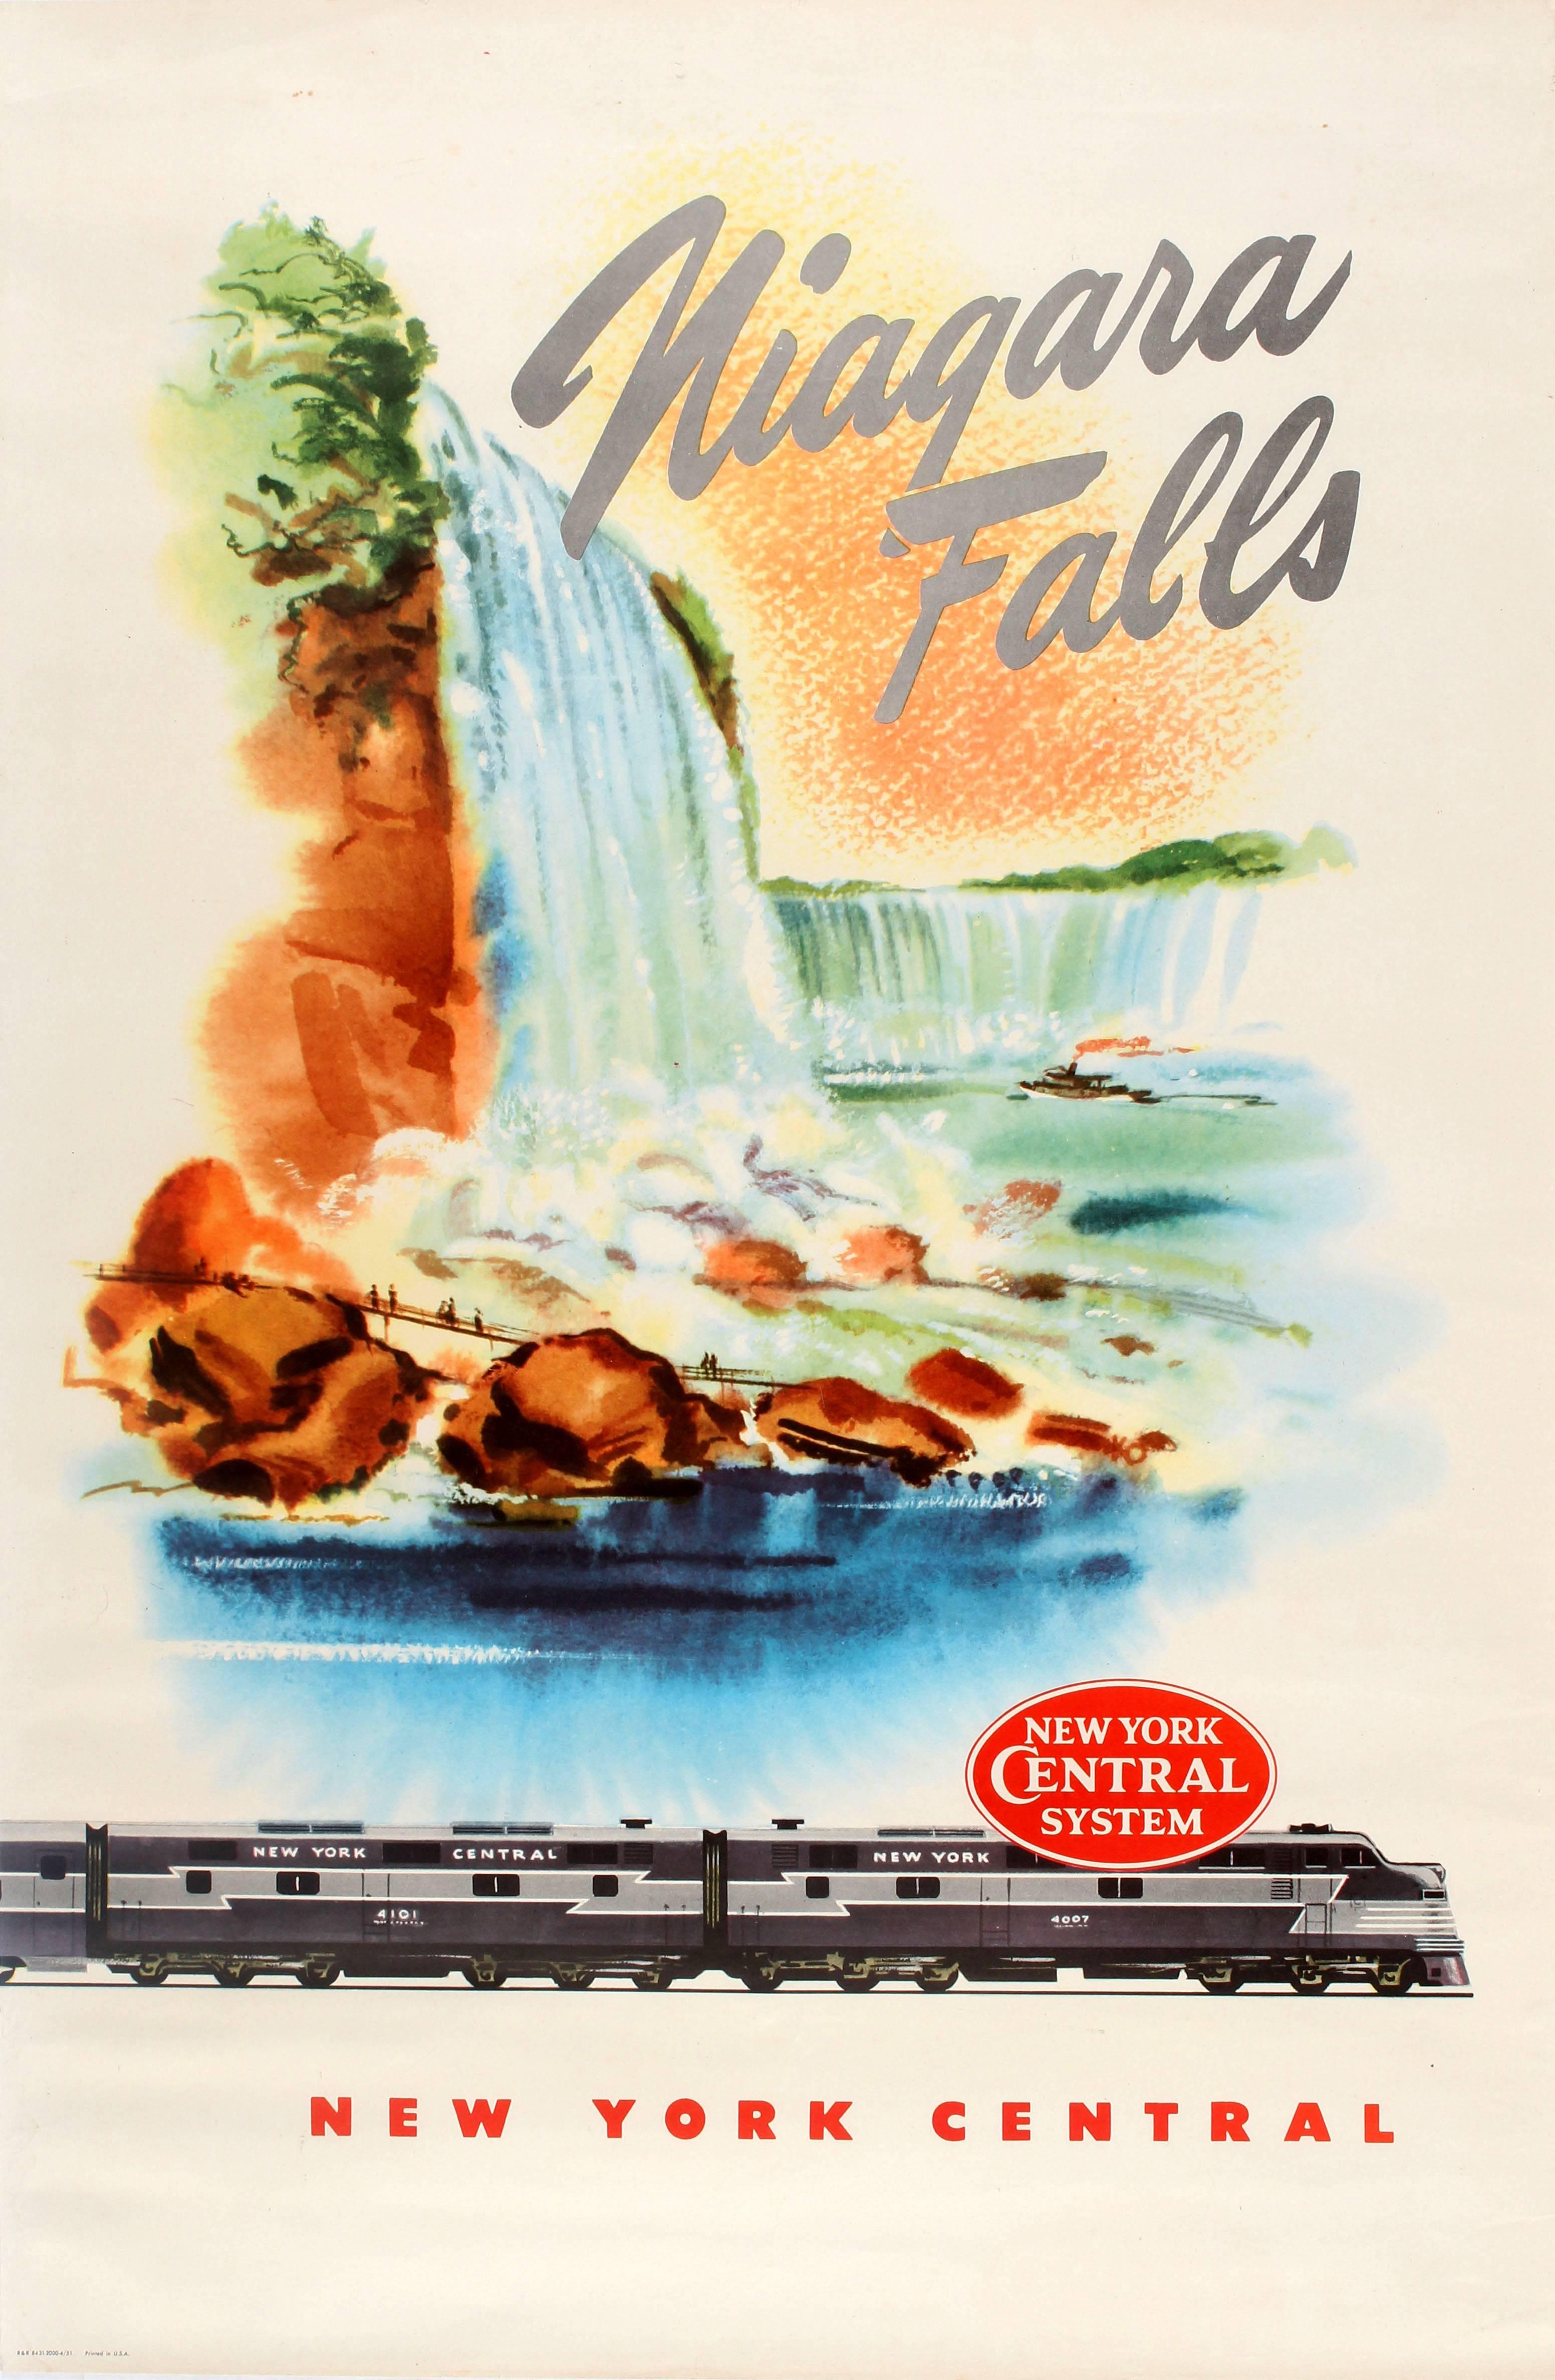 Unknown Print - Original Vintage New York Central Railway Poster Advertising The Niagara Falls